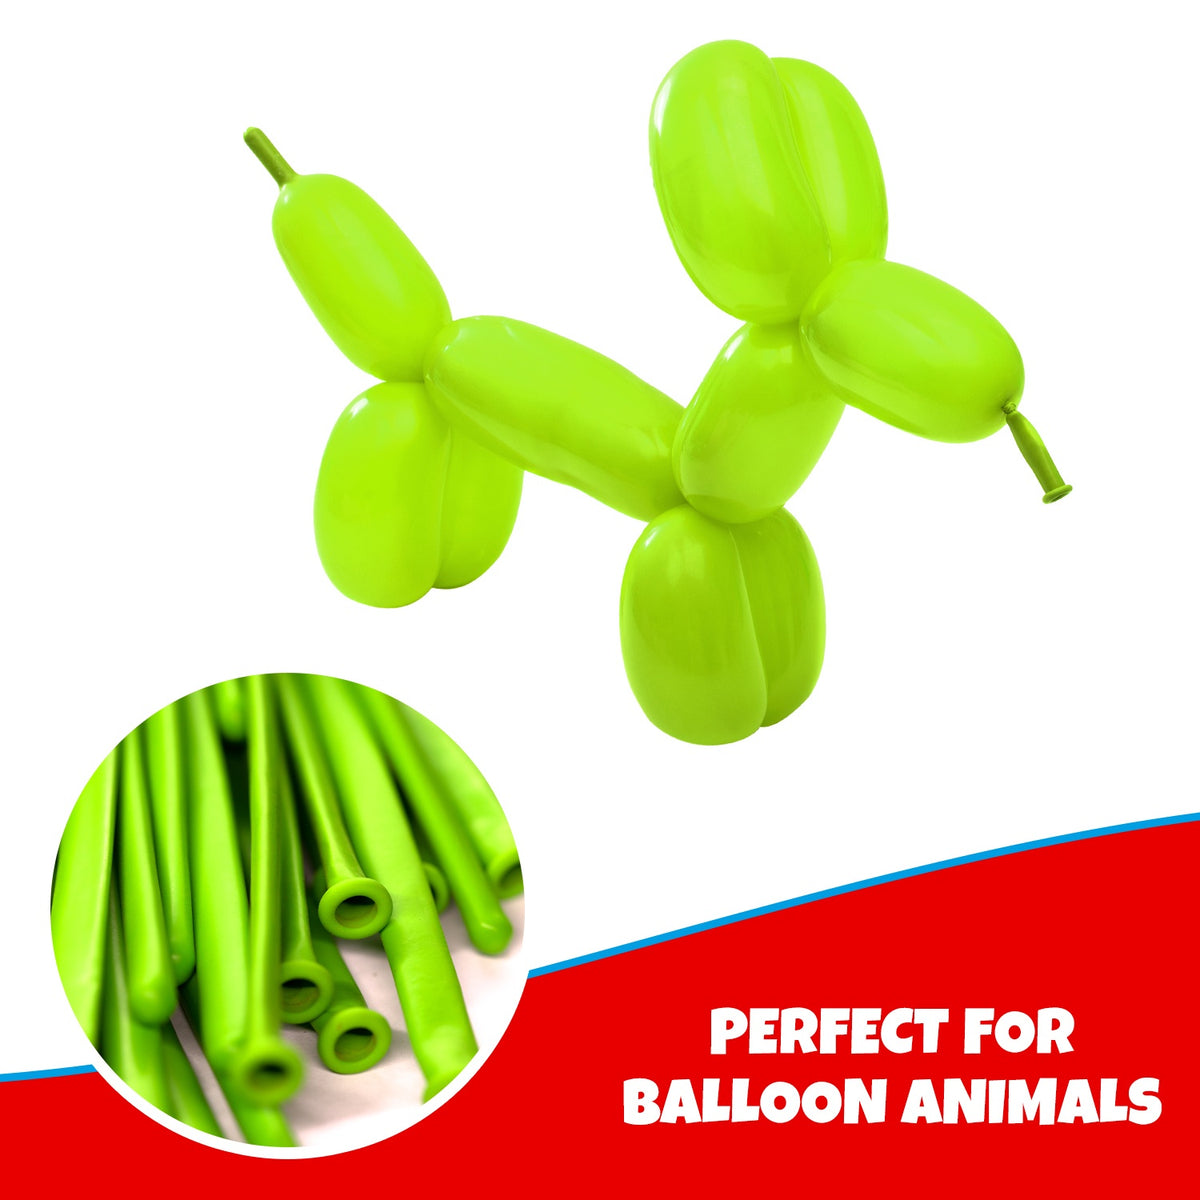 Clownatex 260 Twisting Balloons - Lime Green (100/bag)